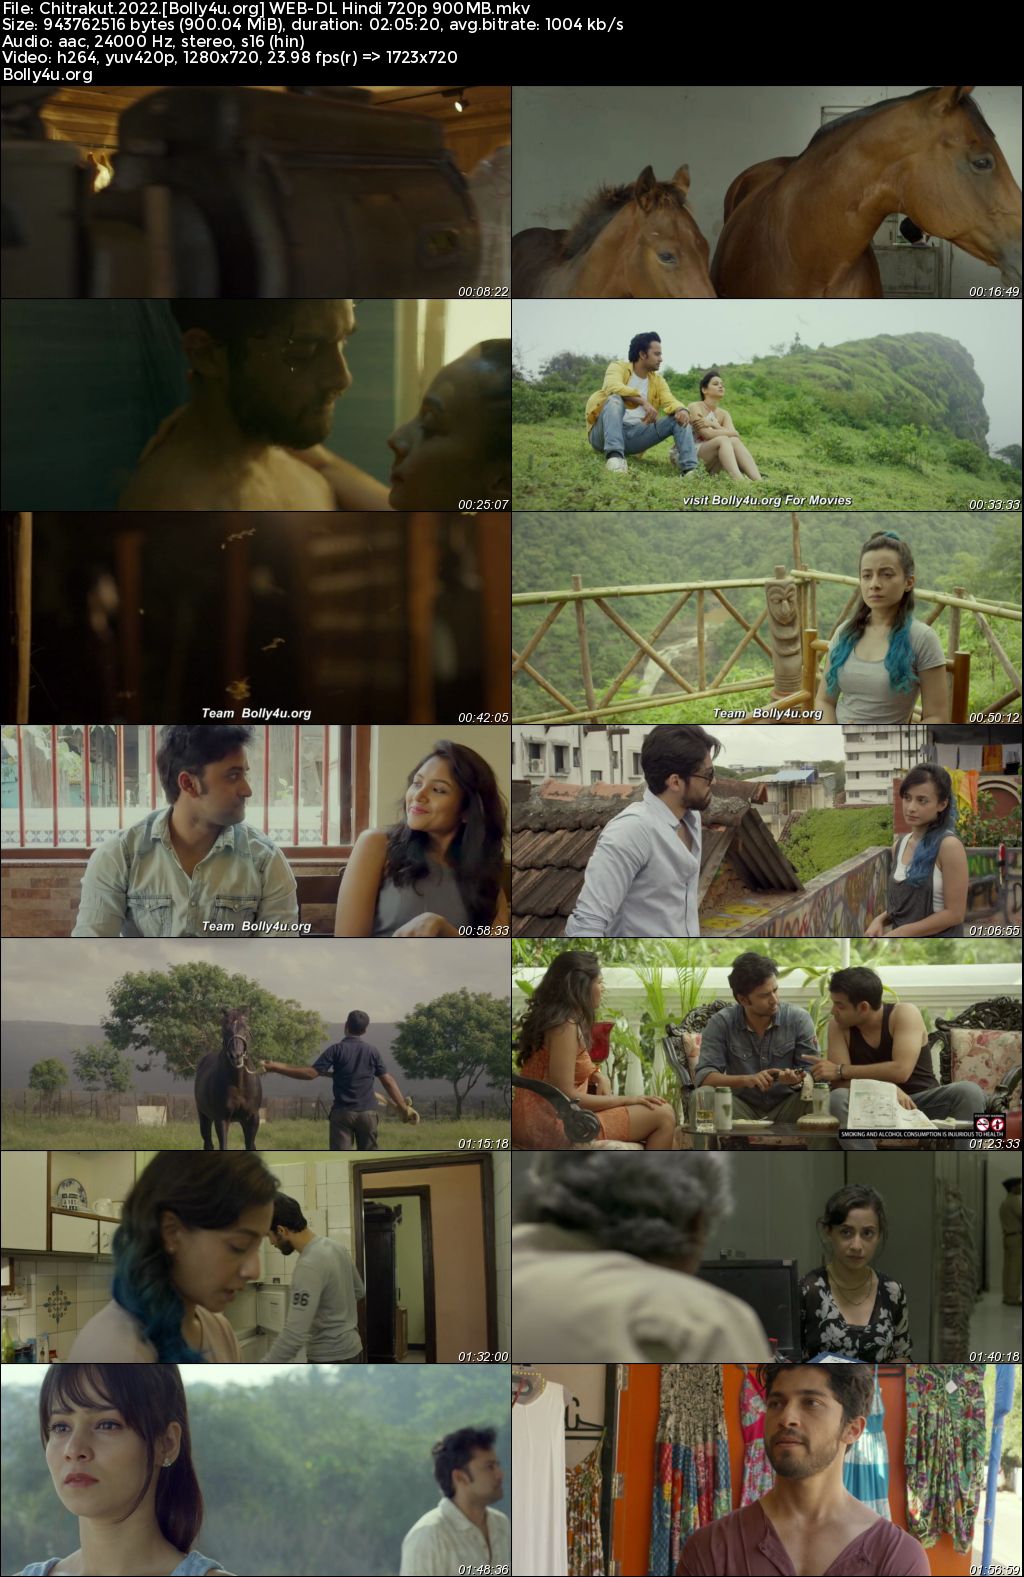 Chitrakut 2022 WEB-DL Hindi Full Movie Download 1080p 720p 480p